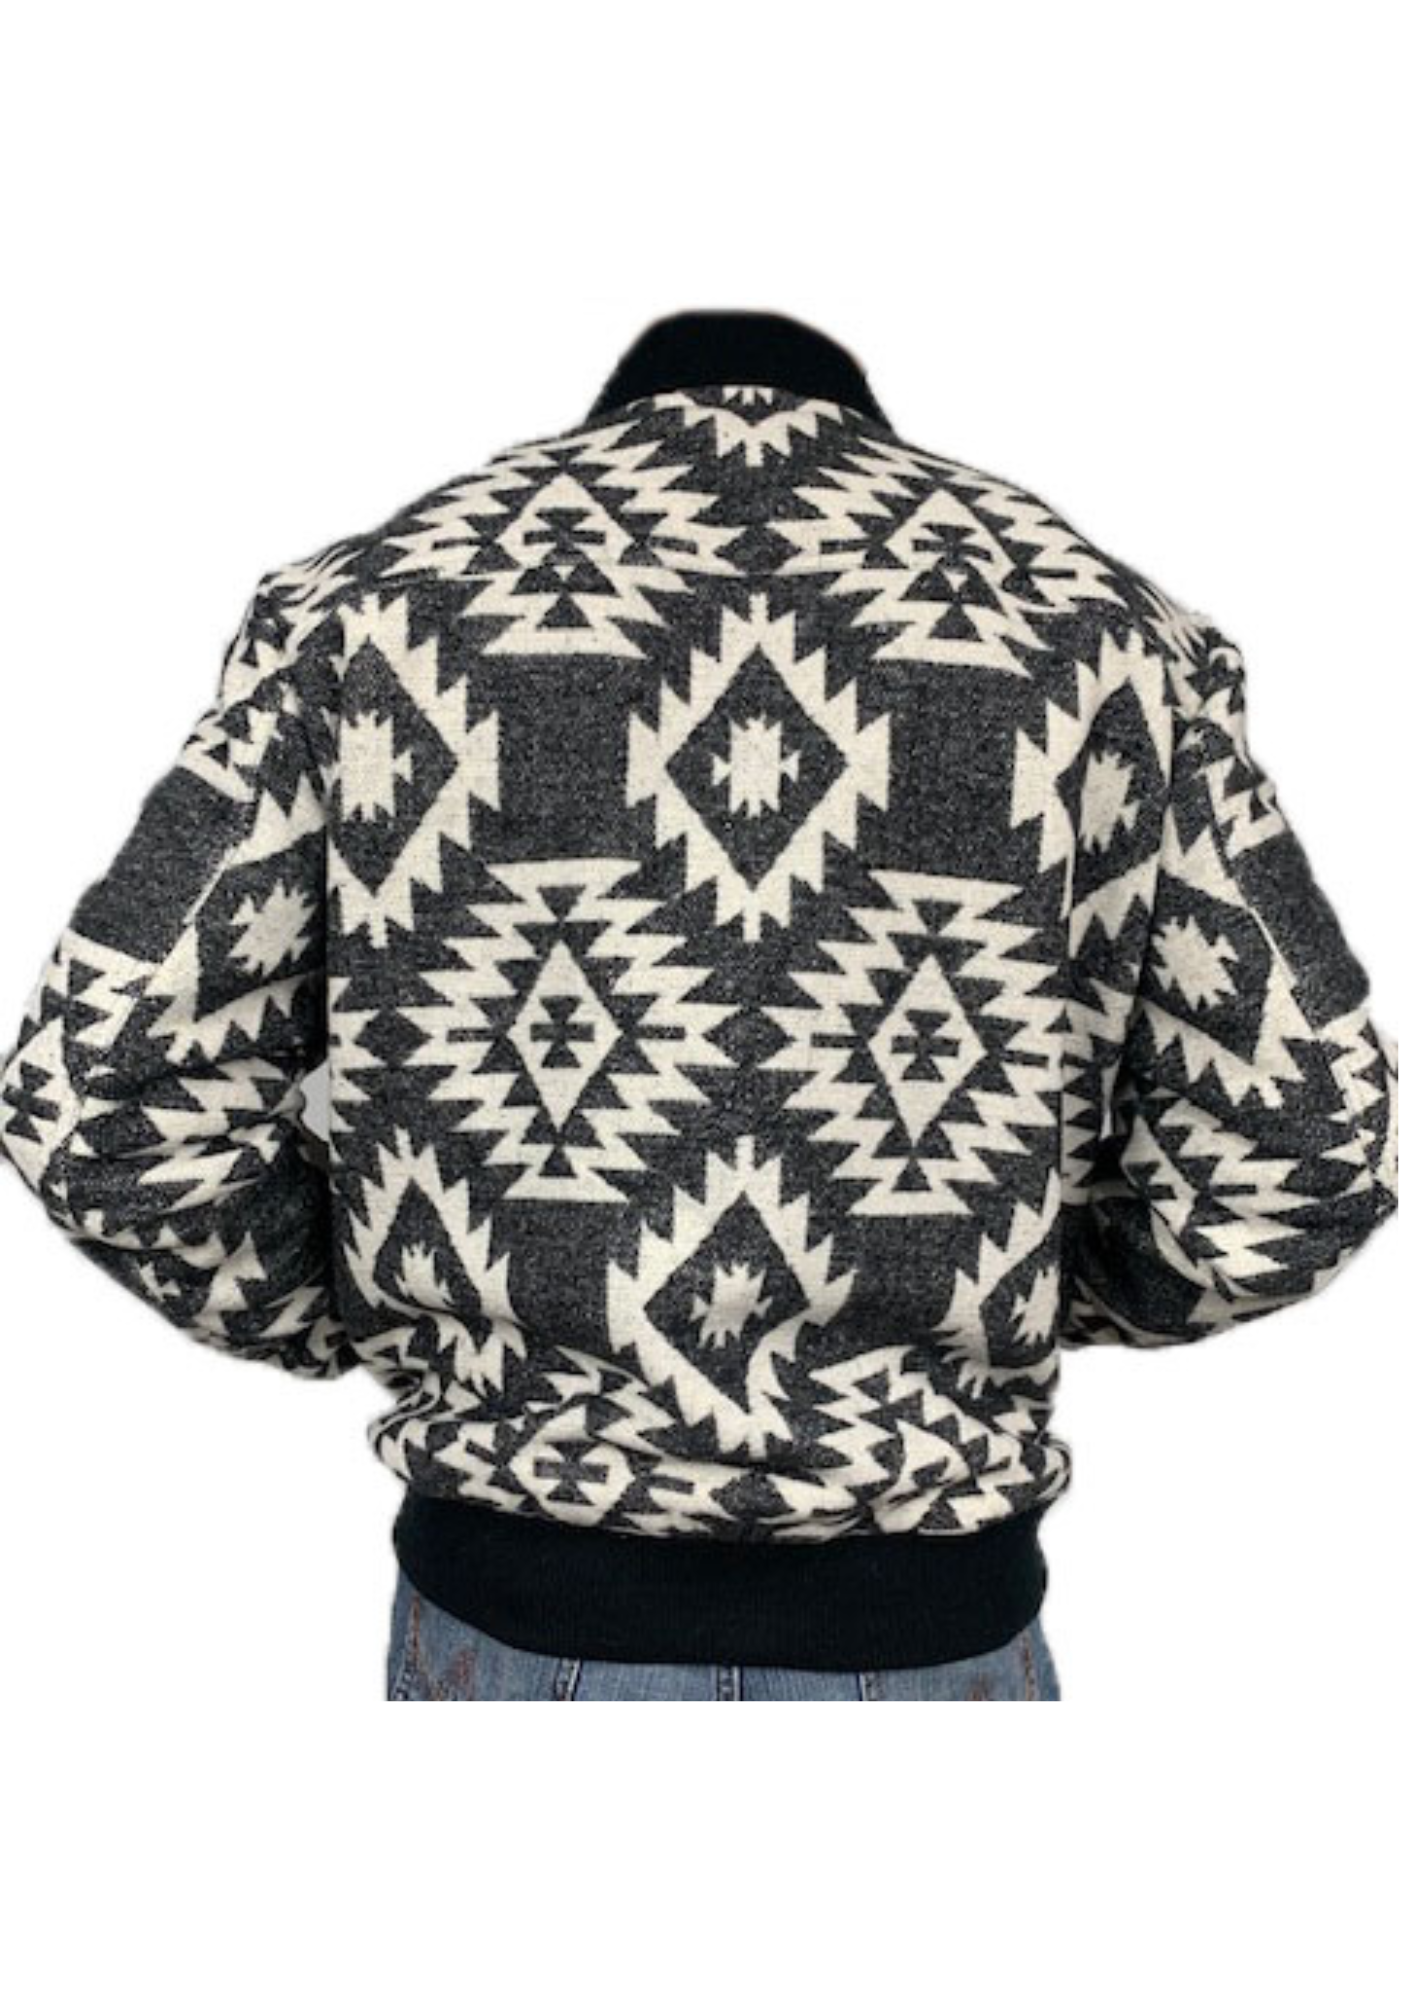 Men's Western Aztec jacket Style#-M-24201